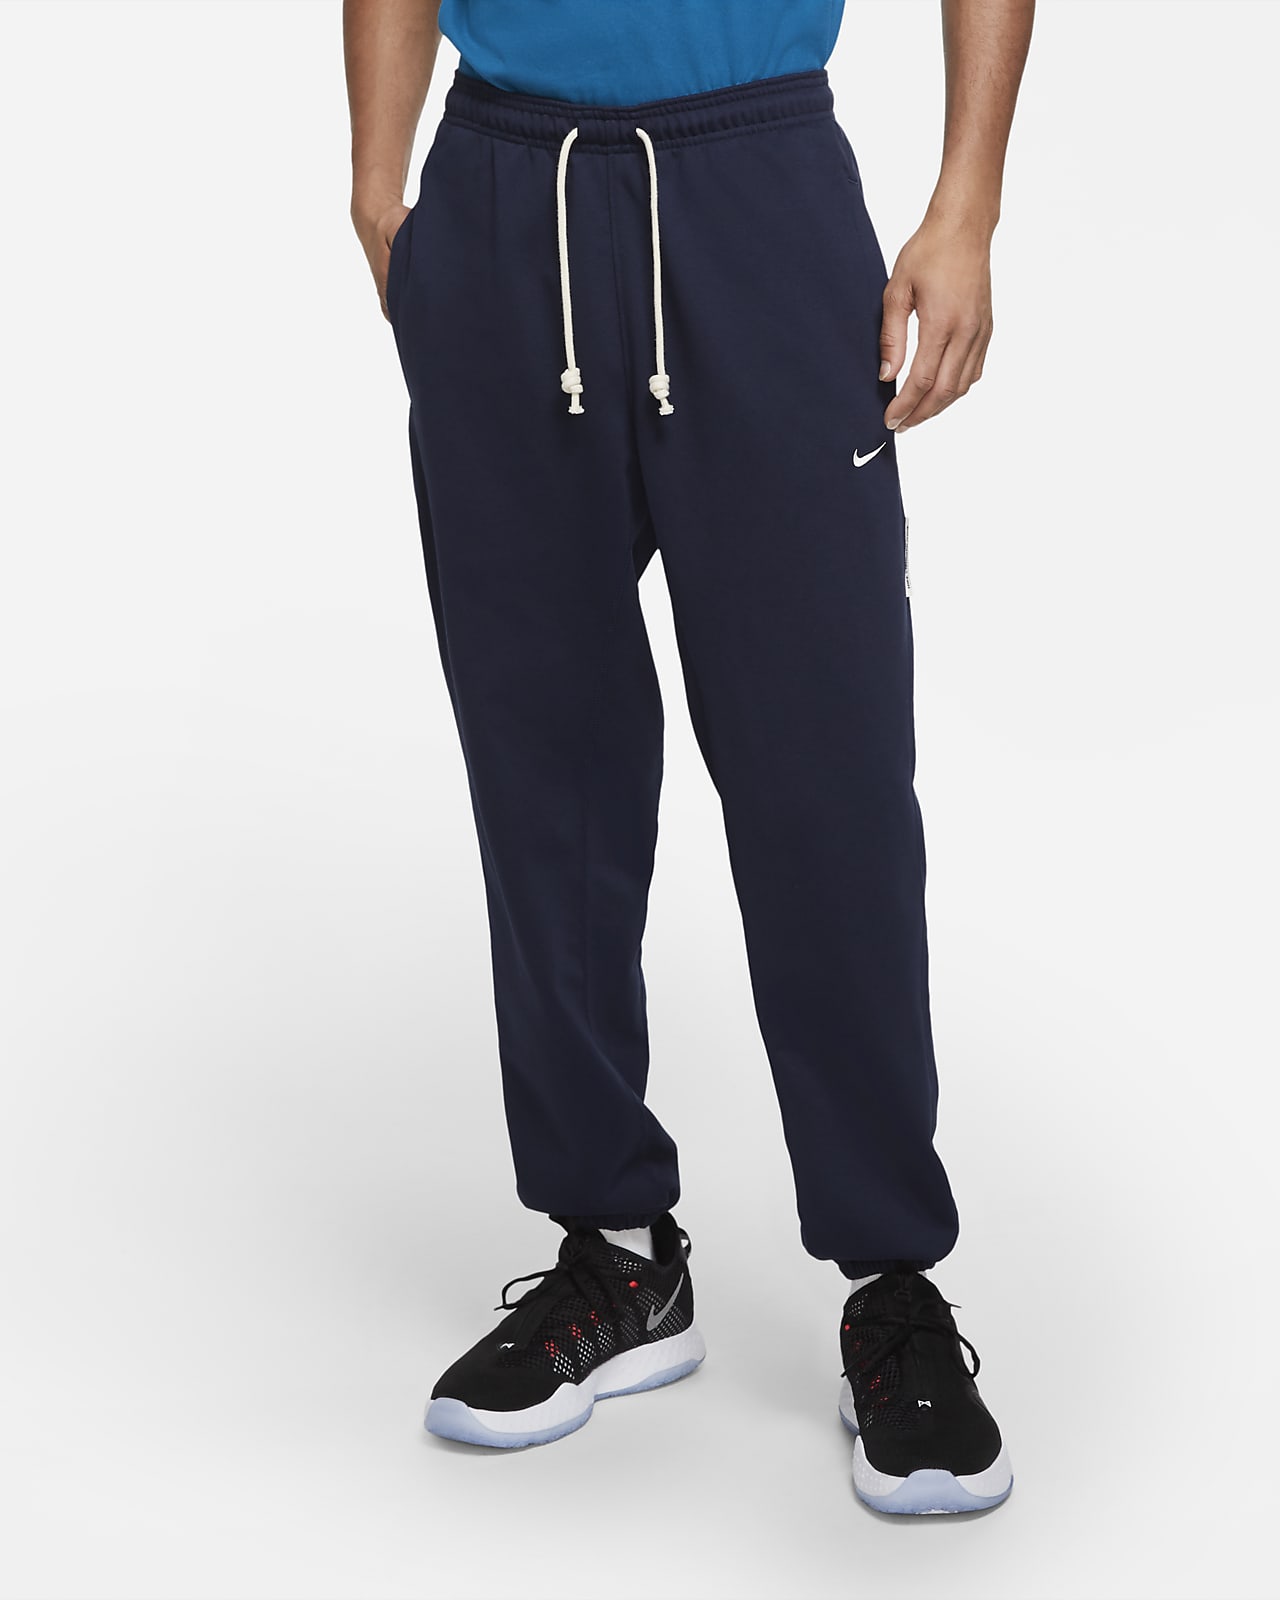 Nike Dri-FIT Standard Issue Men's Basketball Trousers. Nike LU